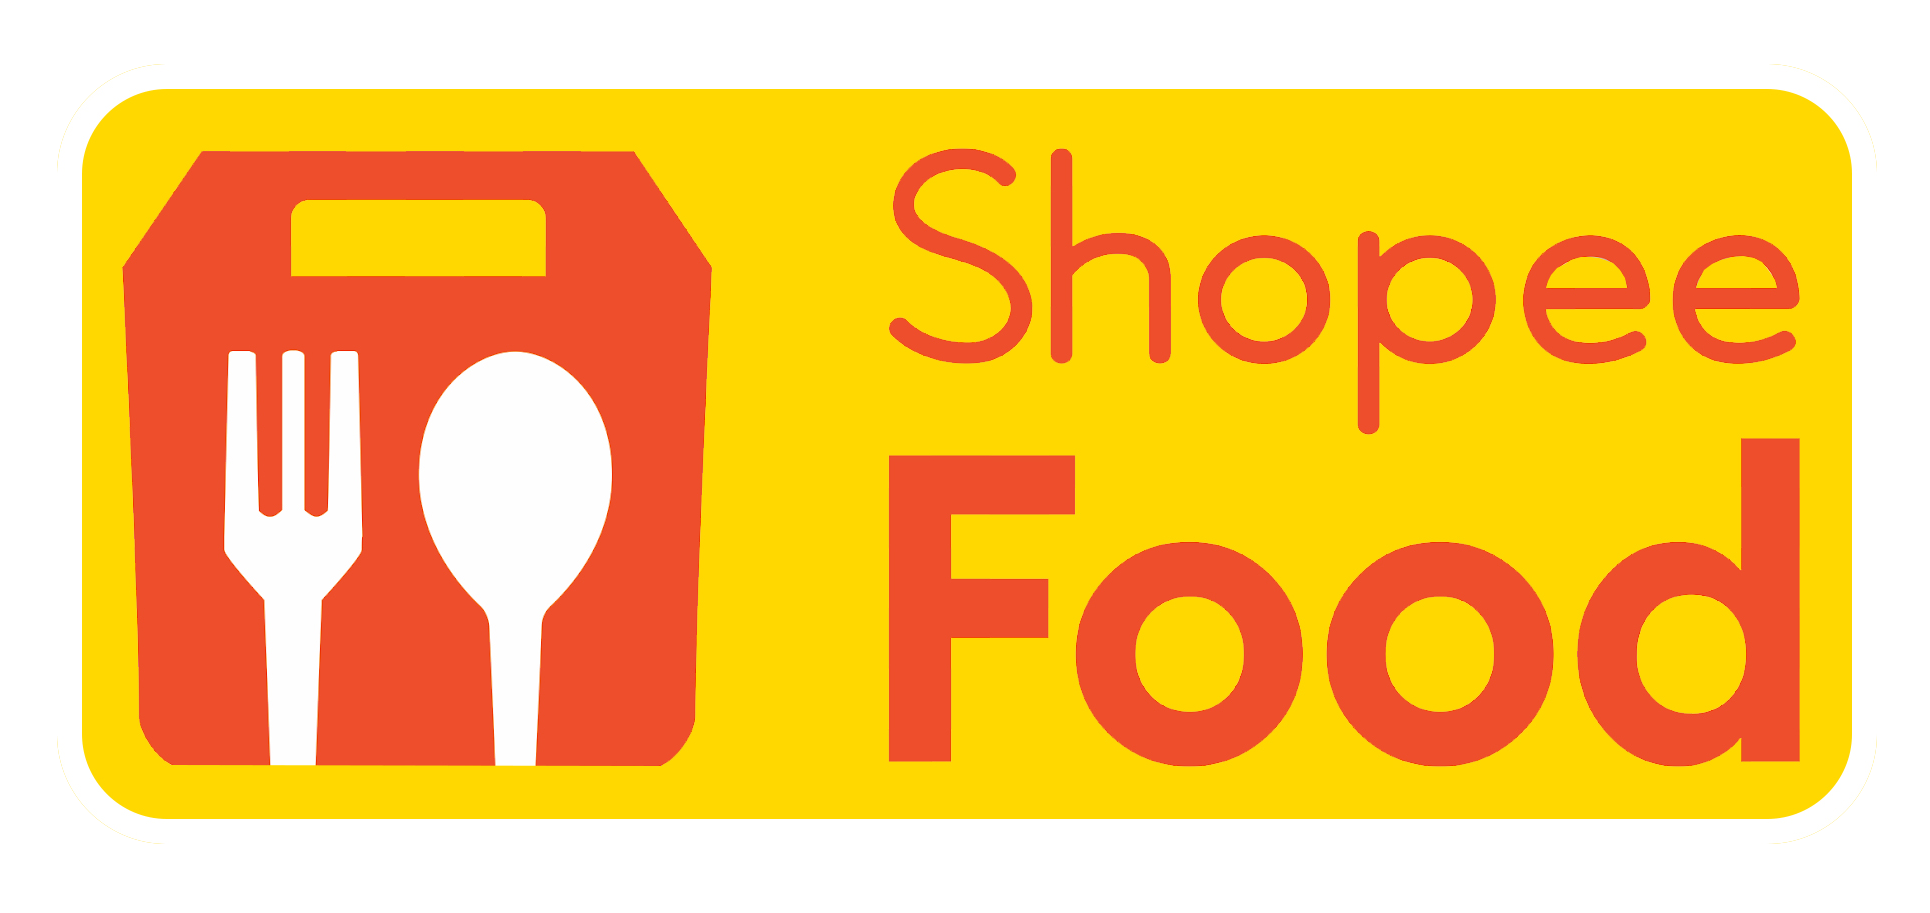 logo shopee food